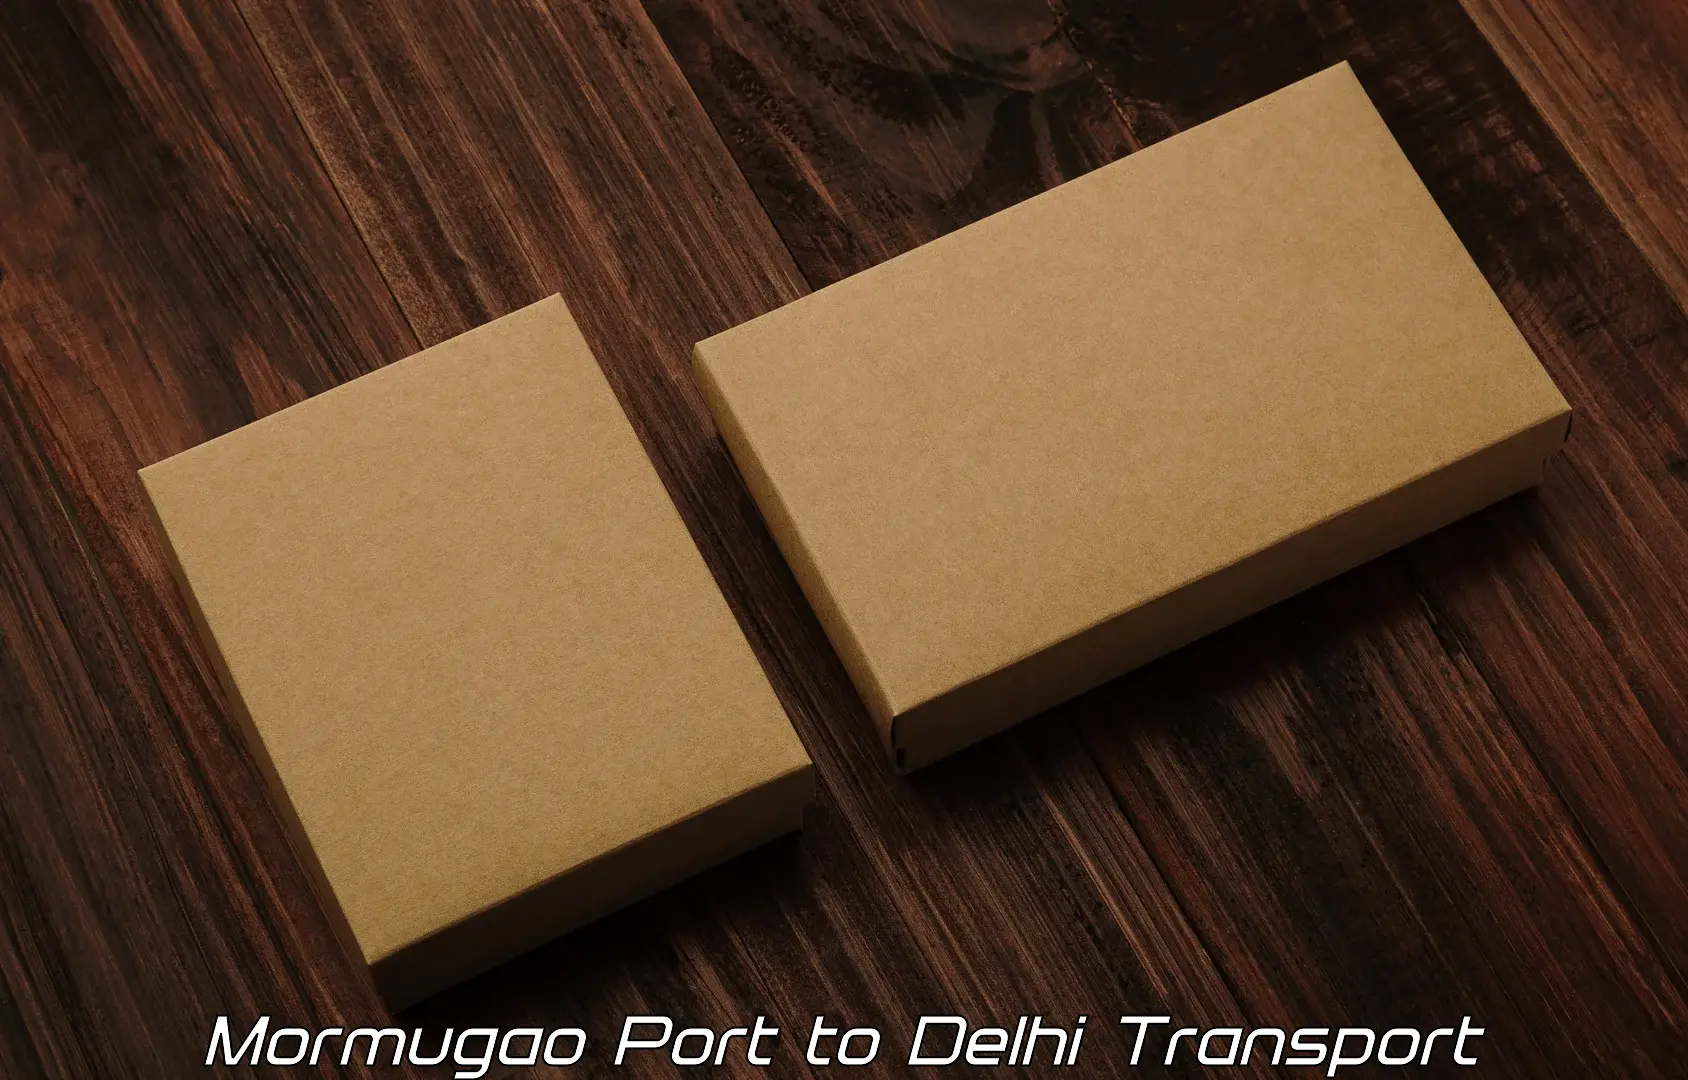 Part load transport service in India Mormugao Port to Delhi